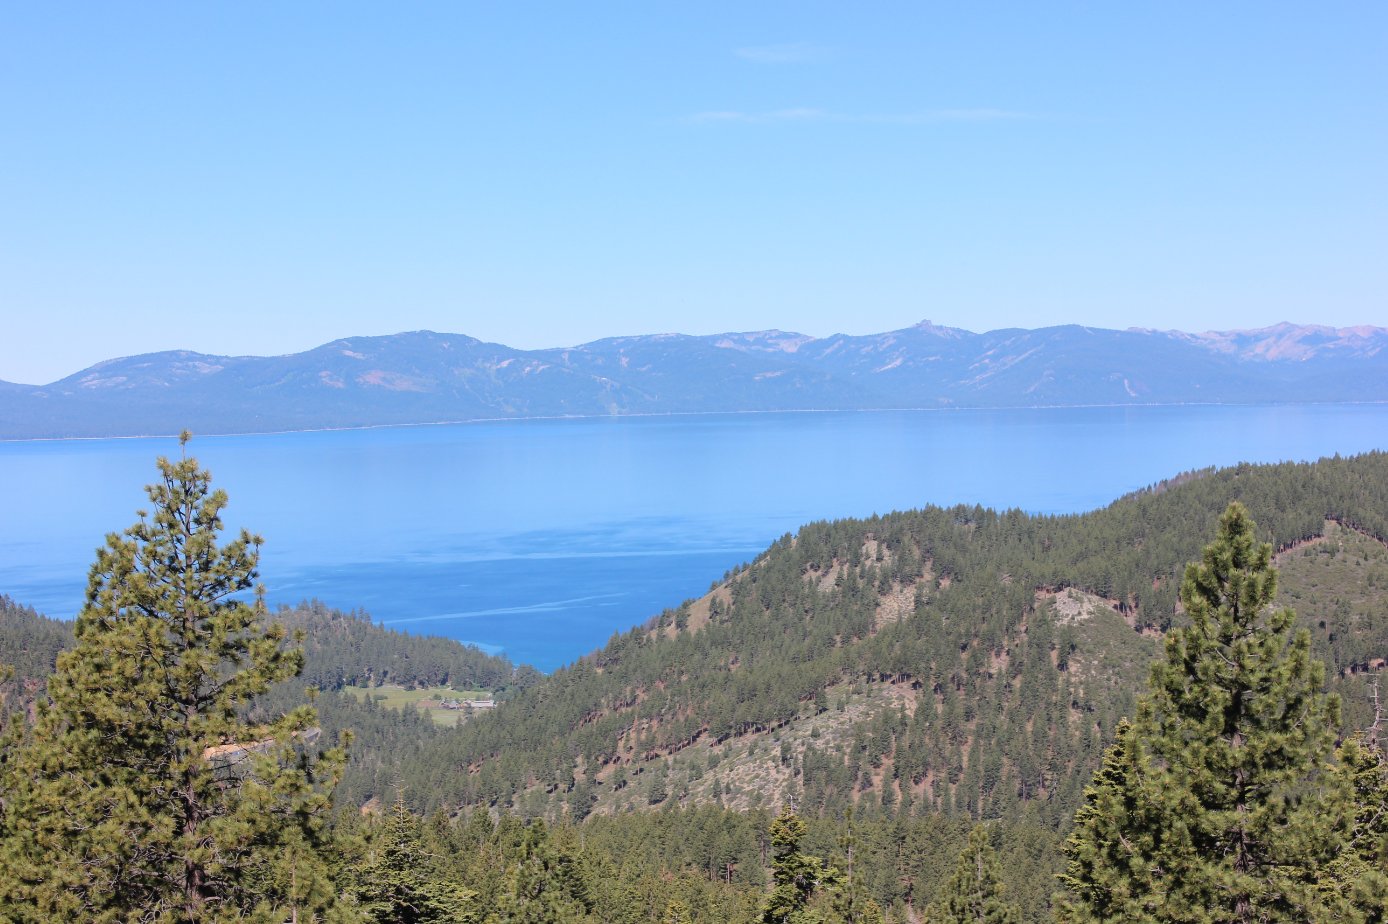 Tahoe in view